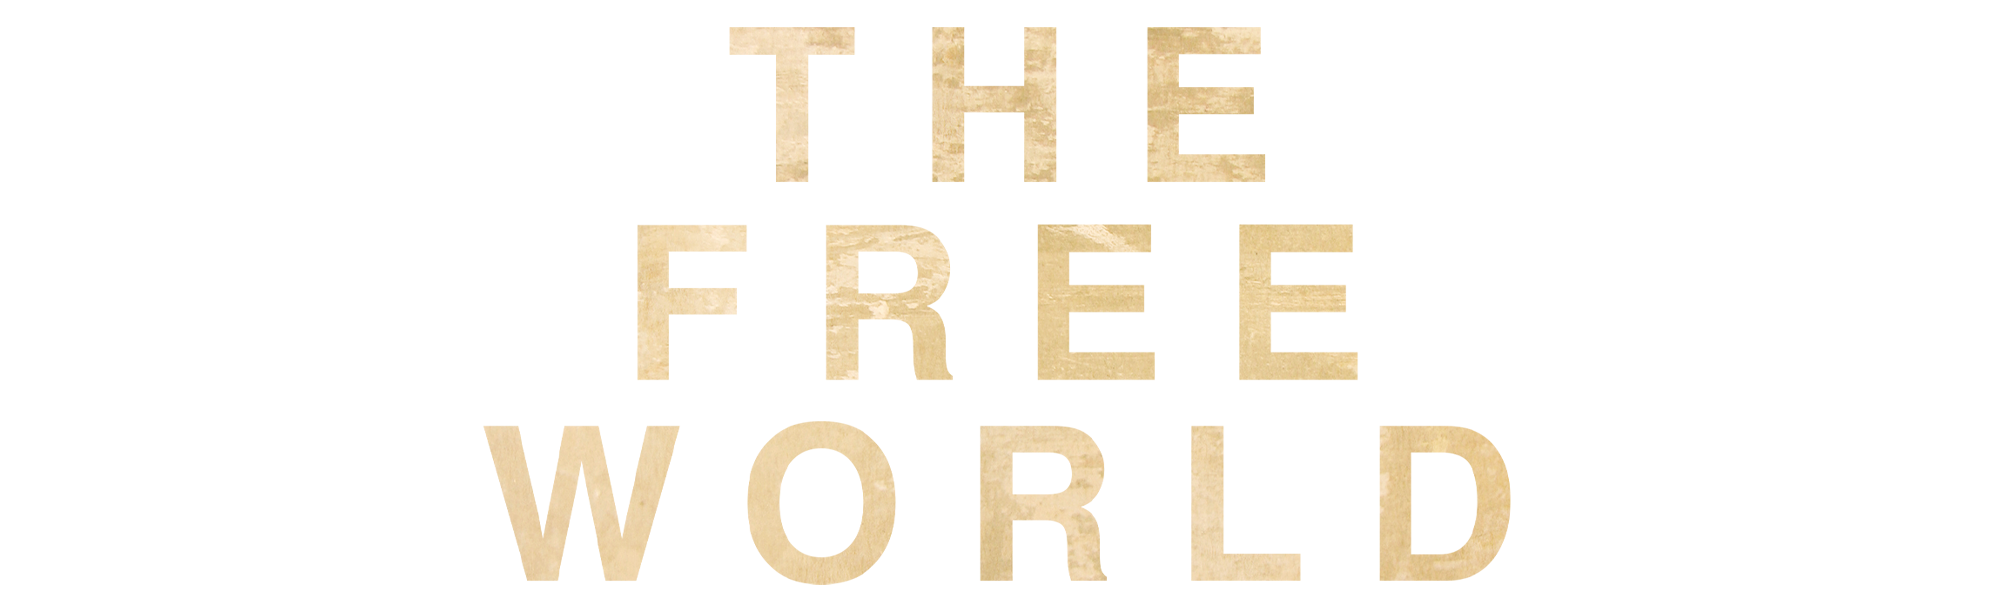 Free World, The